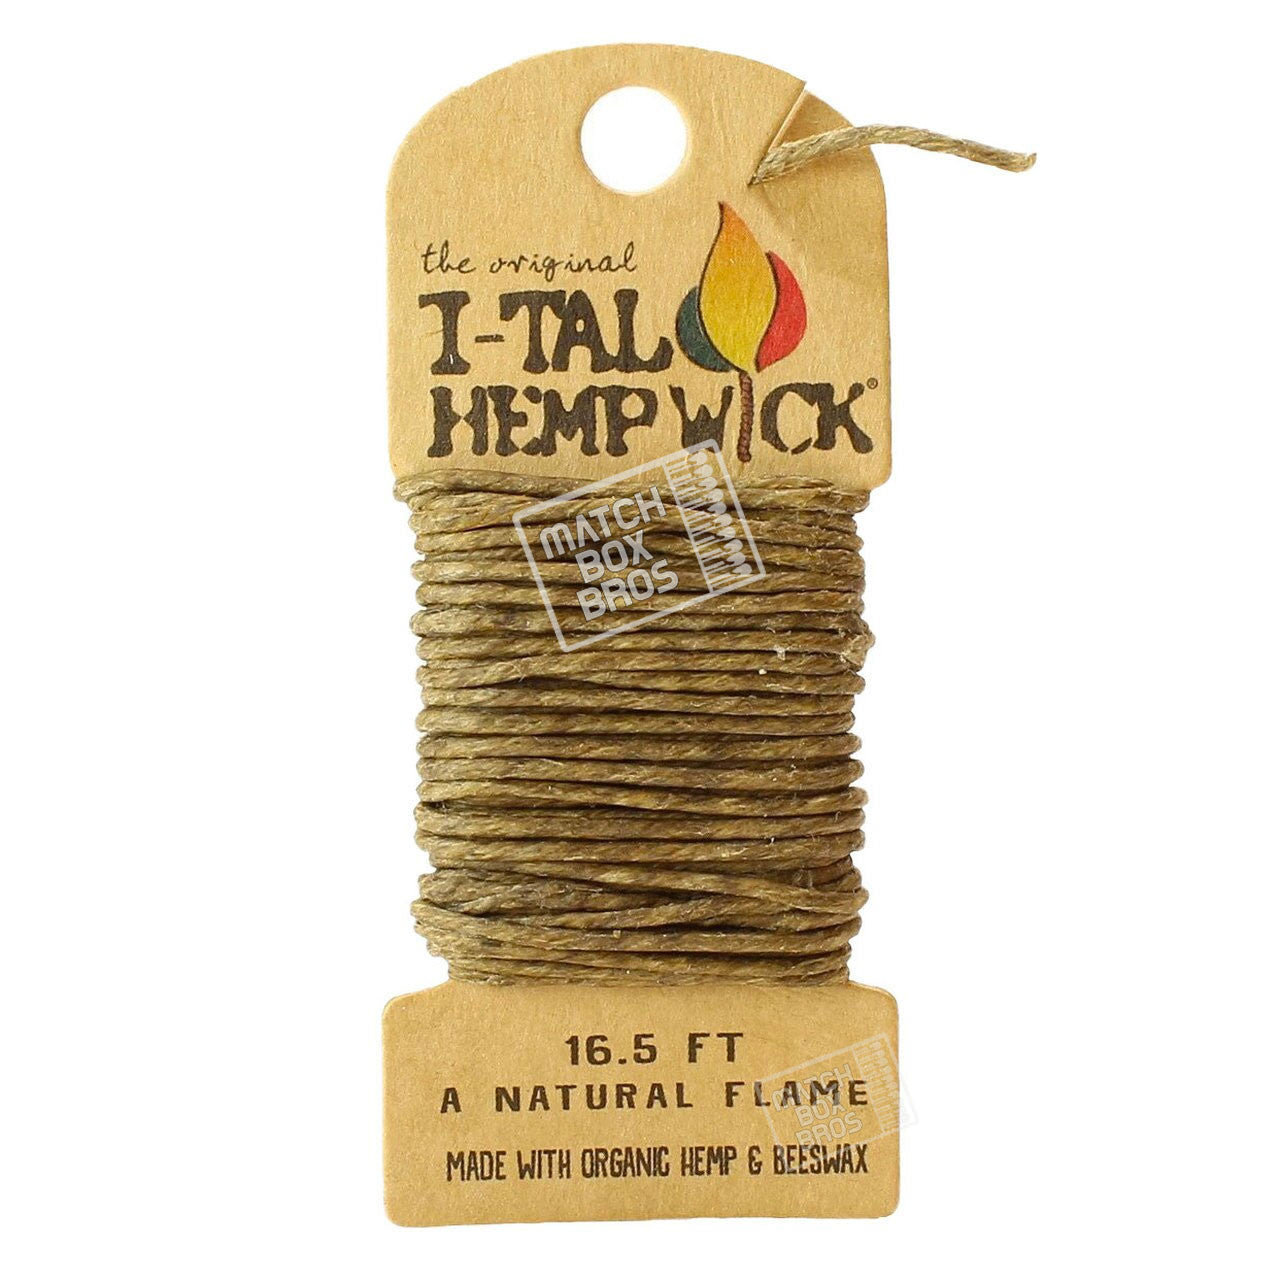 I-Tal Hemp Wick Large (16.5ft) Single Pack